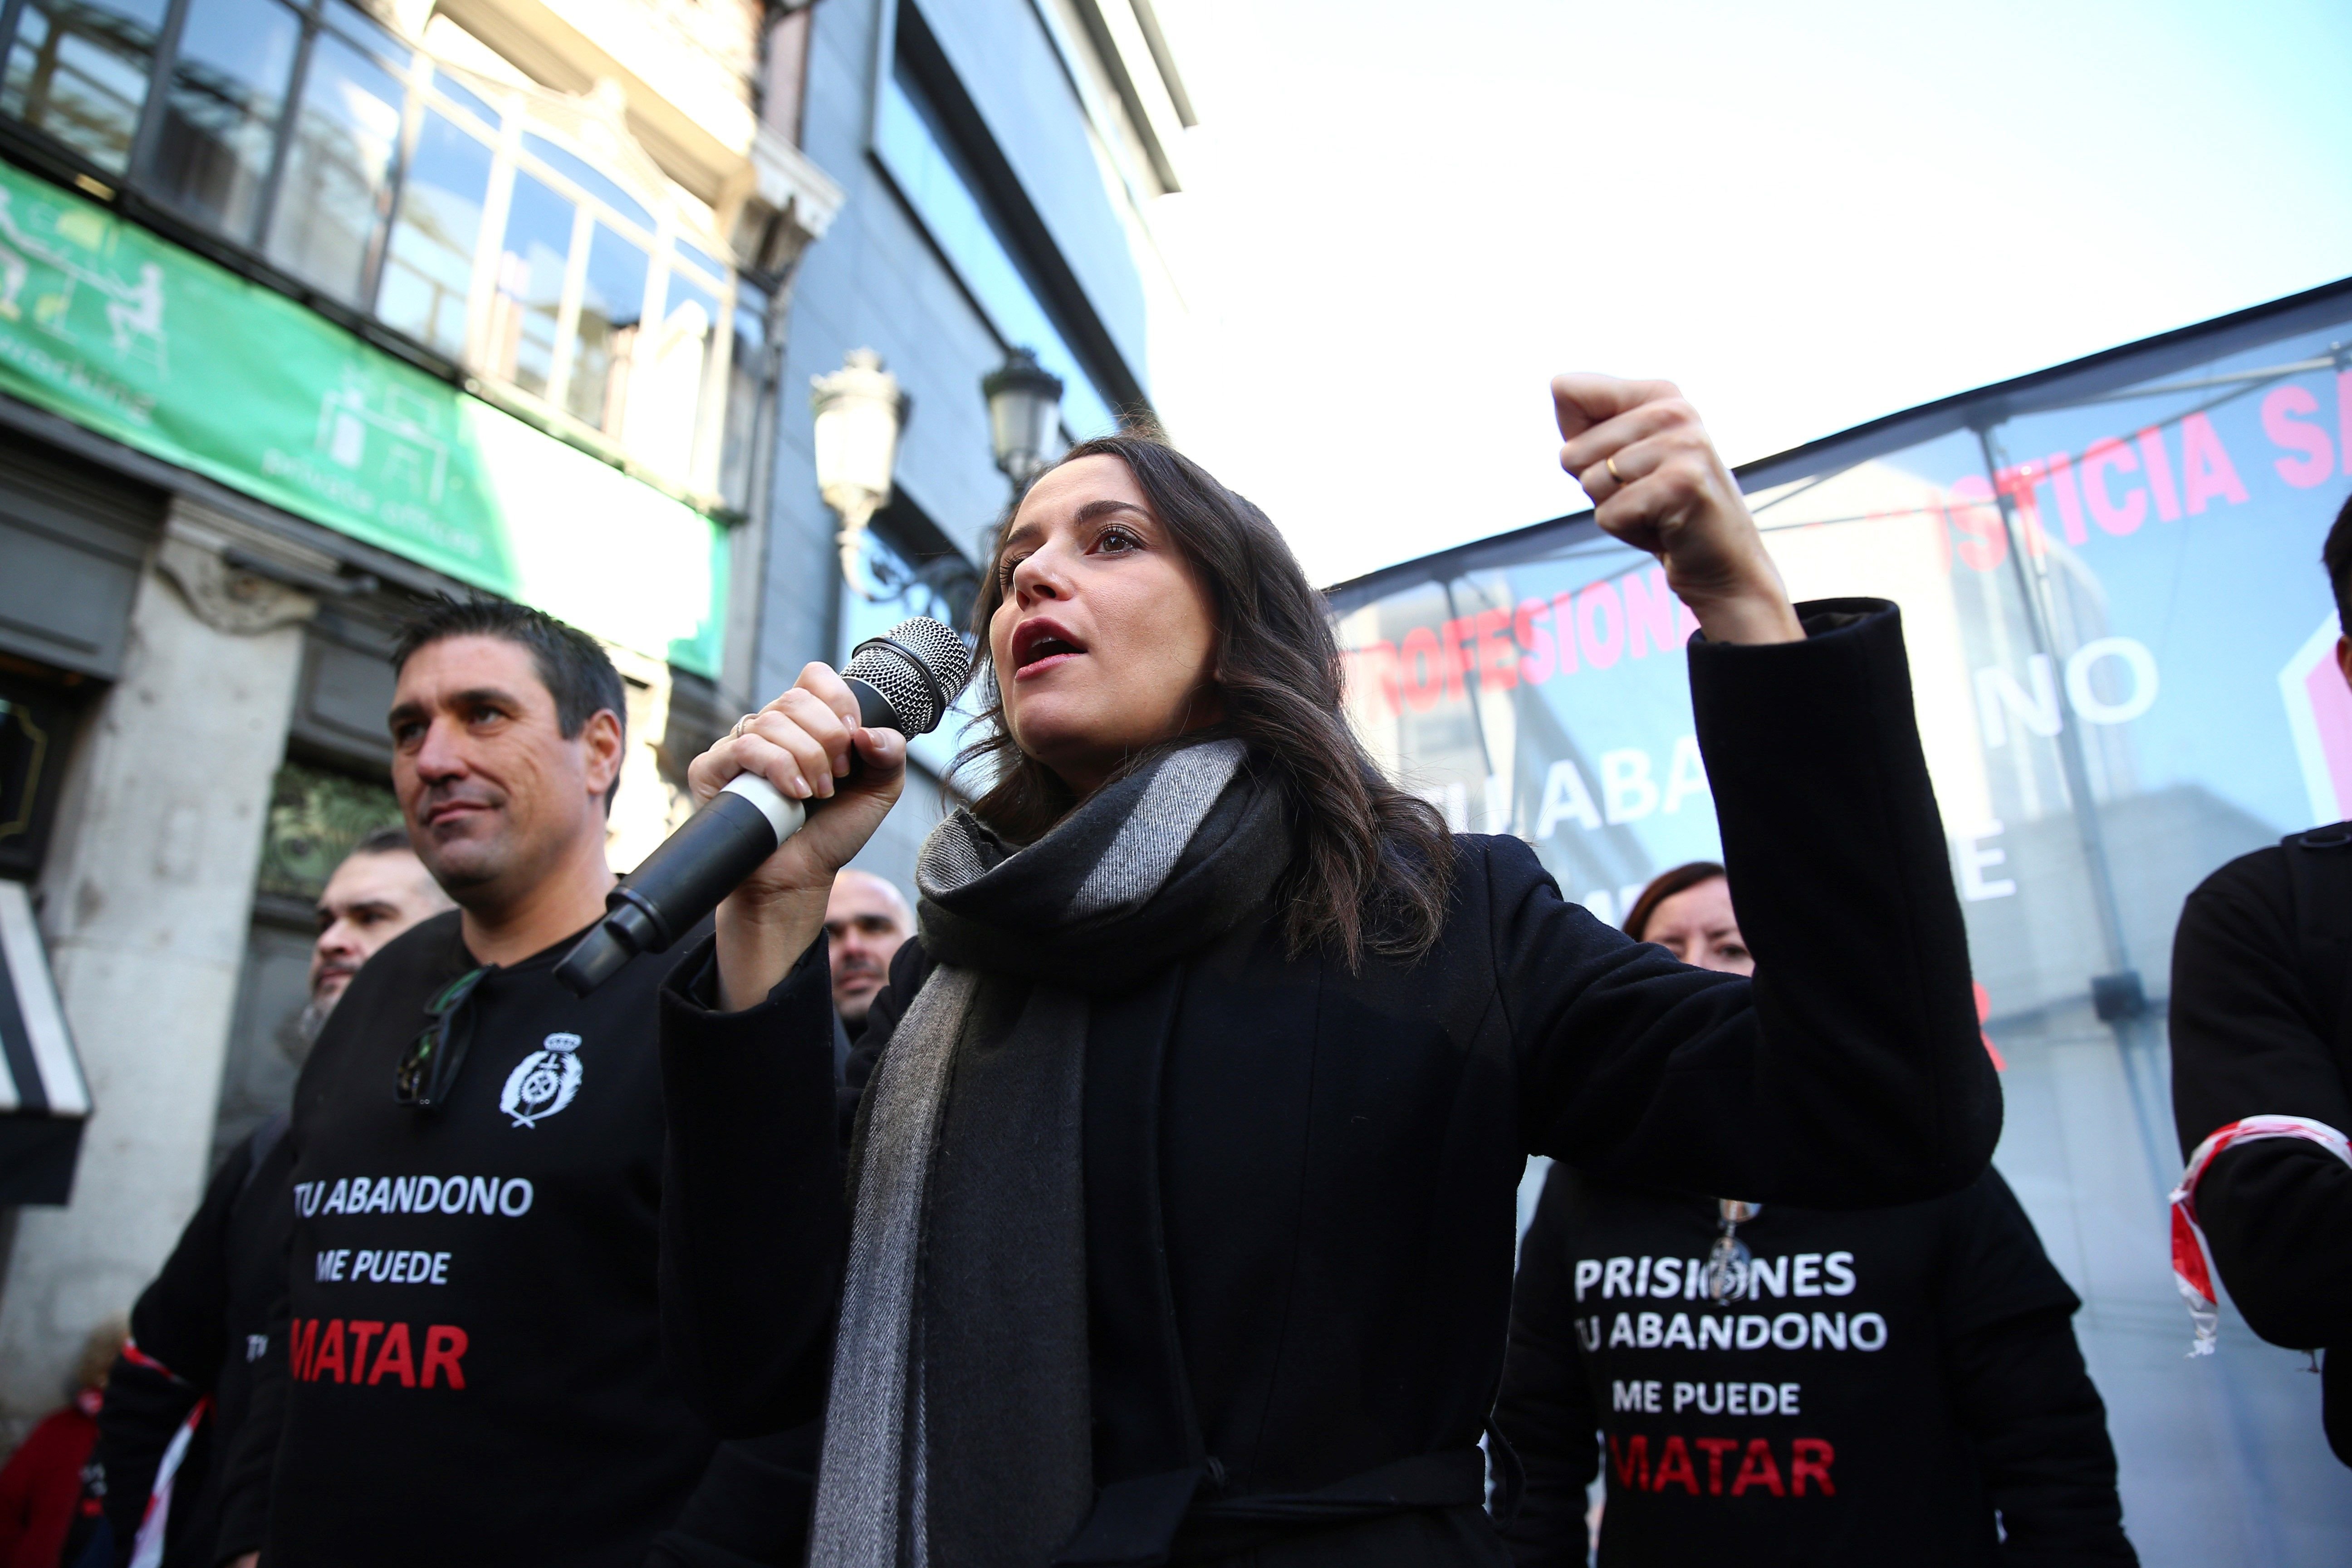 Ofensiva de Ciutadans per impedir que Puigdemont pugui ser candidat